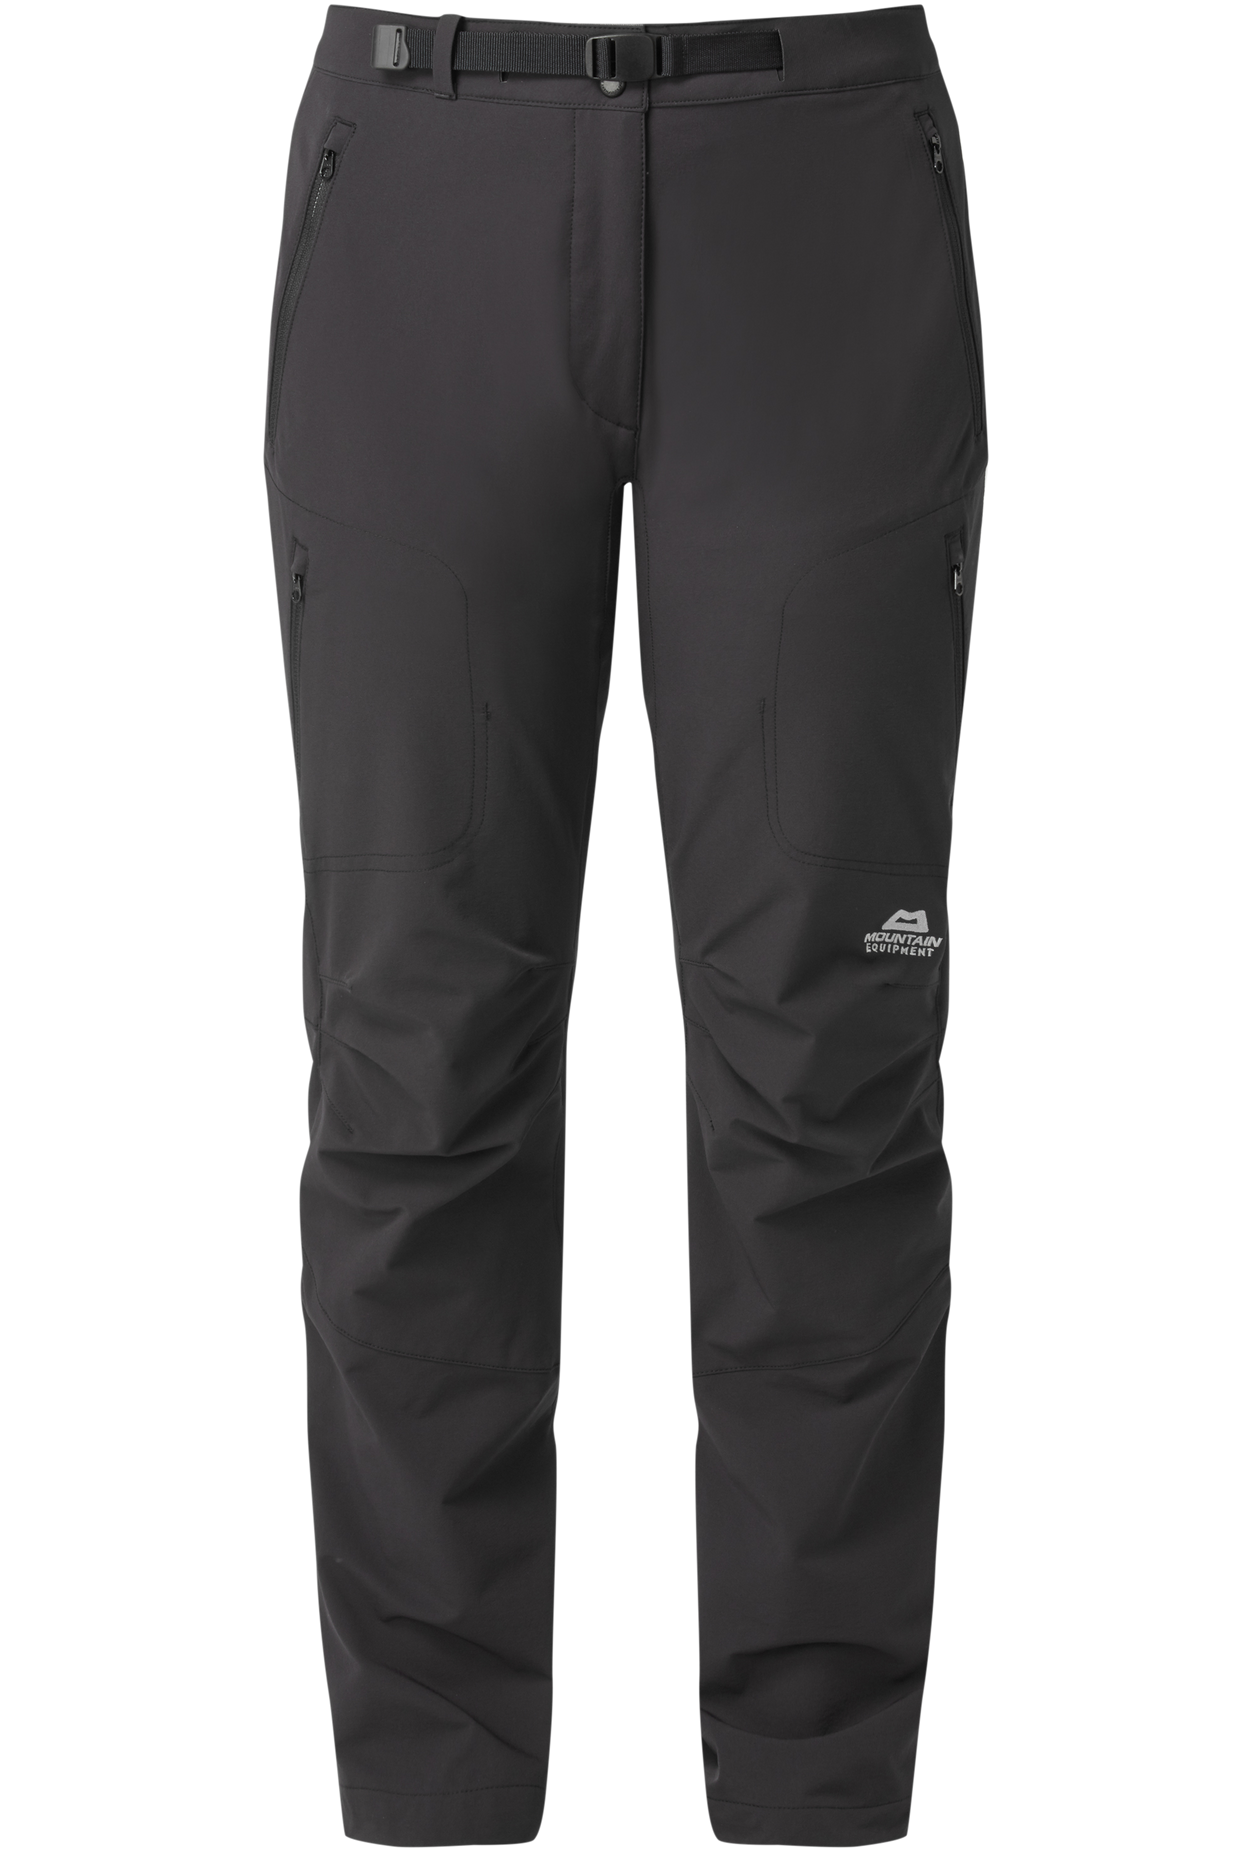 Mountain Equipment dámské softshellové kalhoty Chamois Wmns Pant Barva: black, Velikost: 8/XS